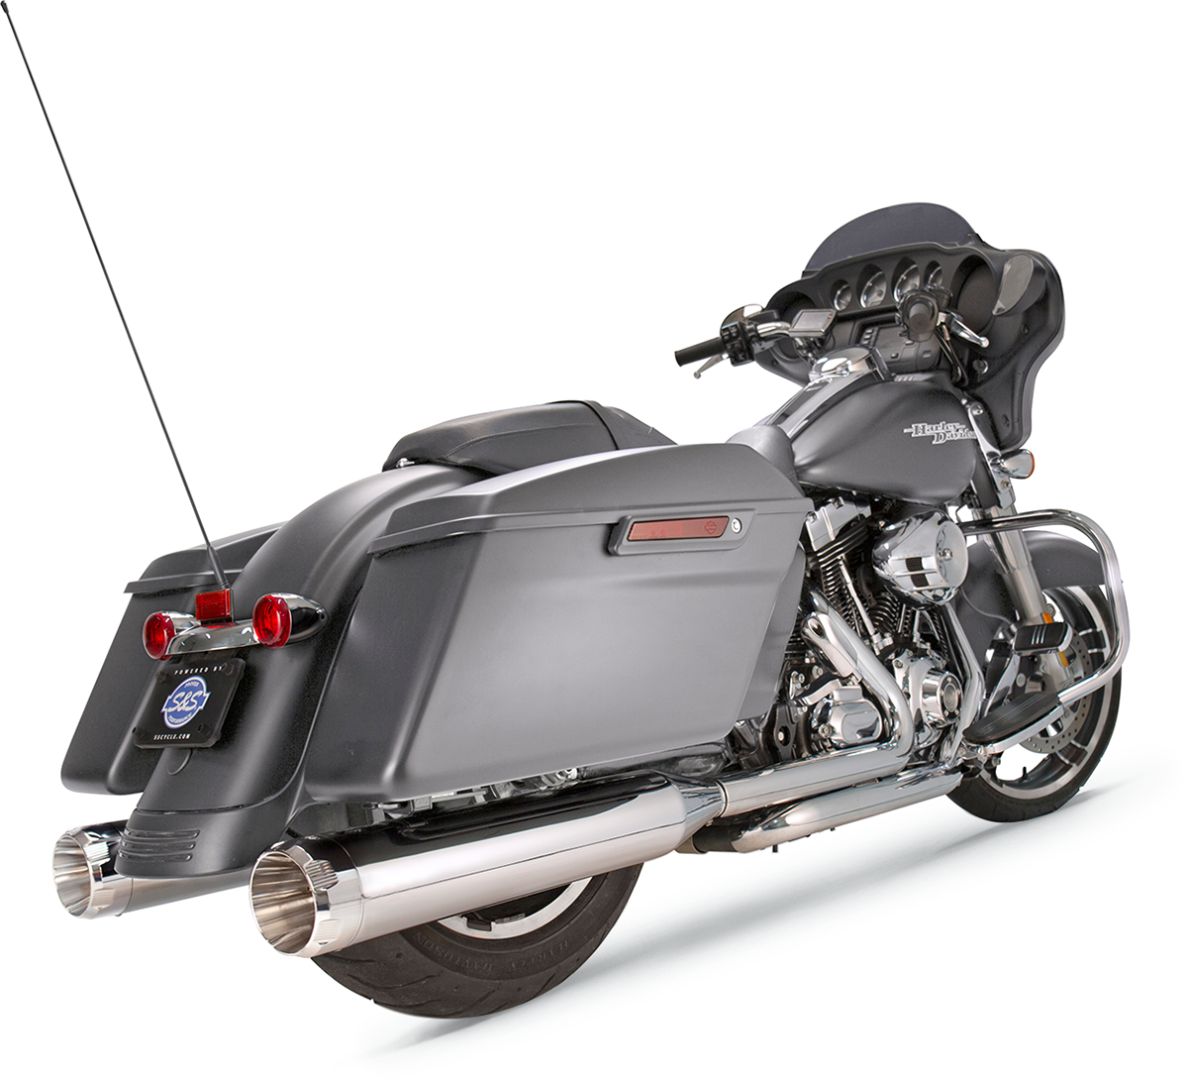 S&s cycle KIPUFOGÓ 4.5" FELCSÚSZTATHATÓ MK45 CHROME THRUSTER END CAP-CHROME BODY FINISH Harley Davidson FLHR 1750 ABS Road King 107 motor kipufogó 0